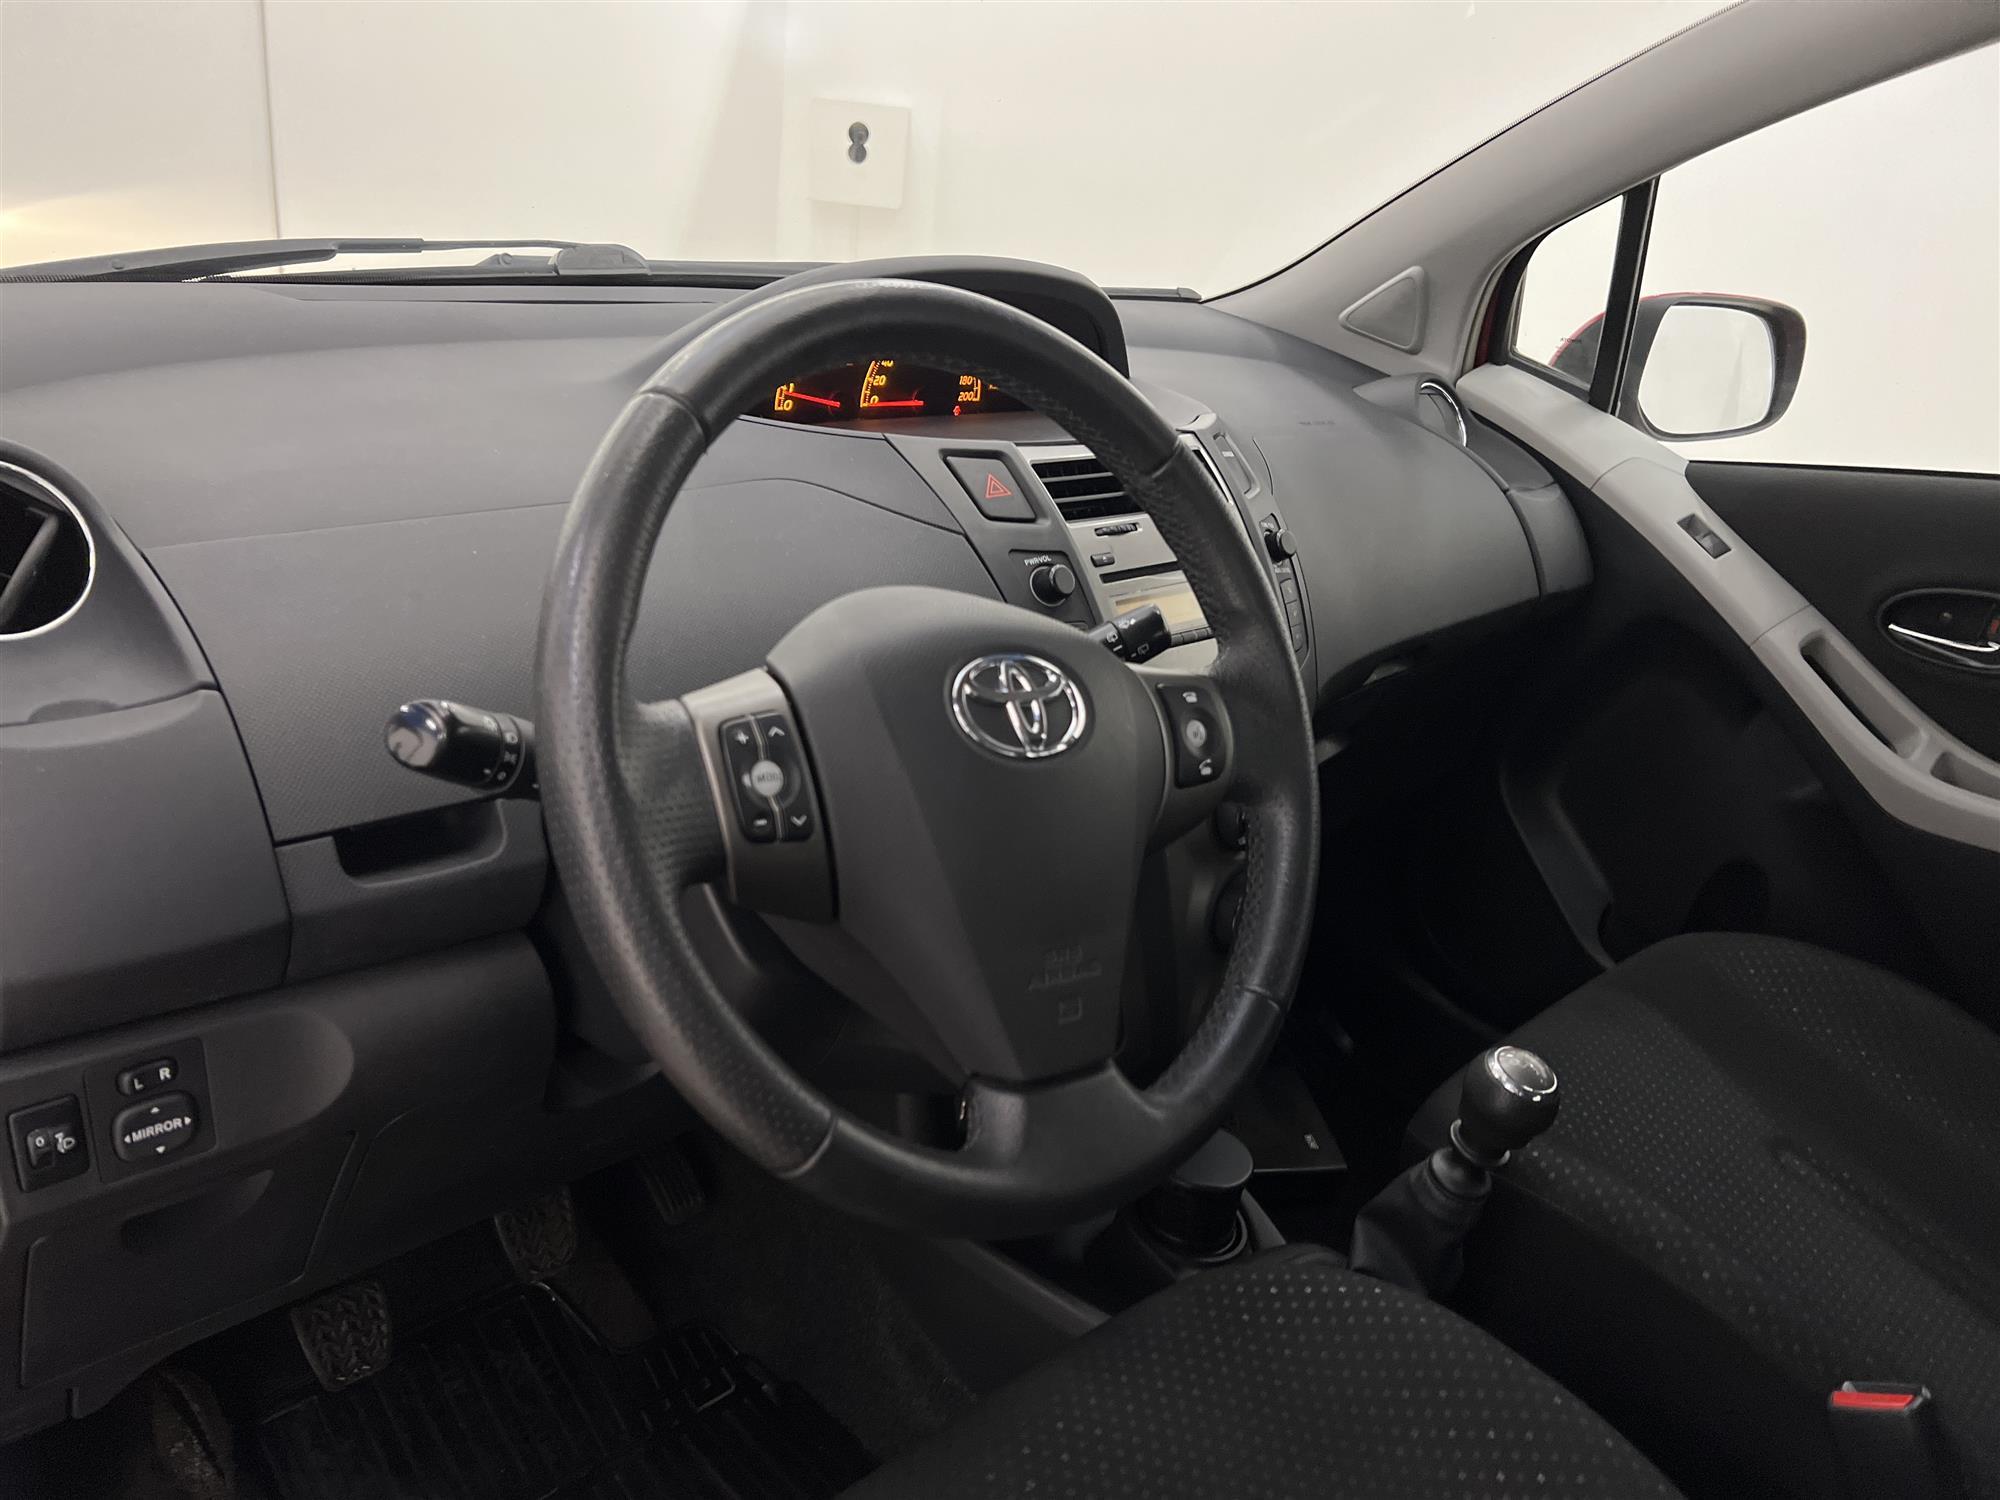 Toyota Yaris 1.33 Dual VVT-i 99hk 1 Brukare Välservad Nybes